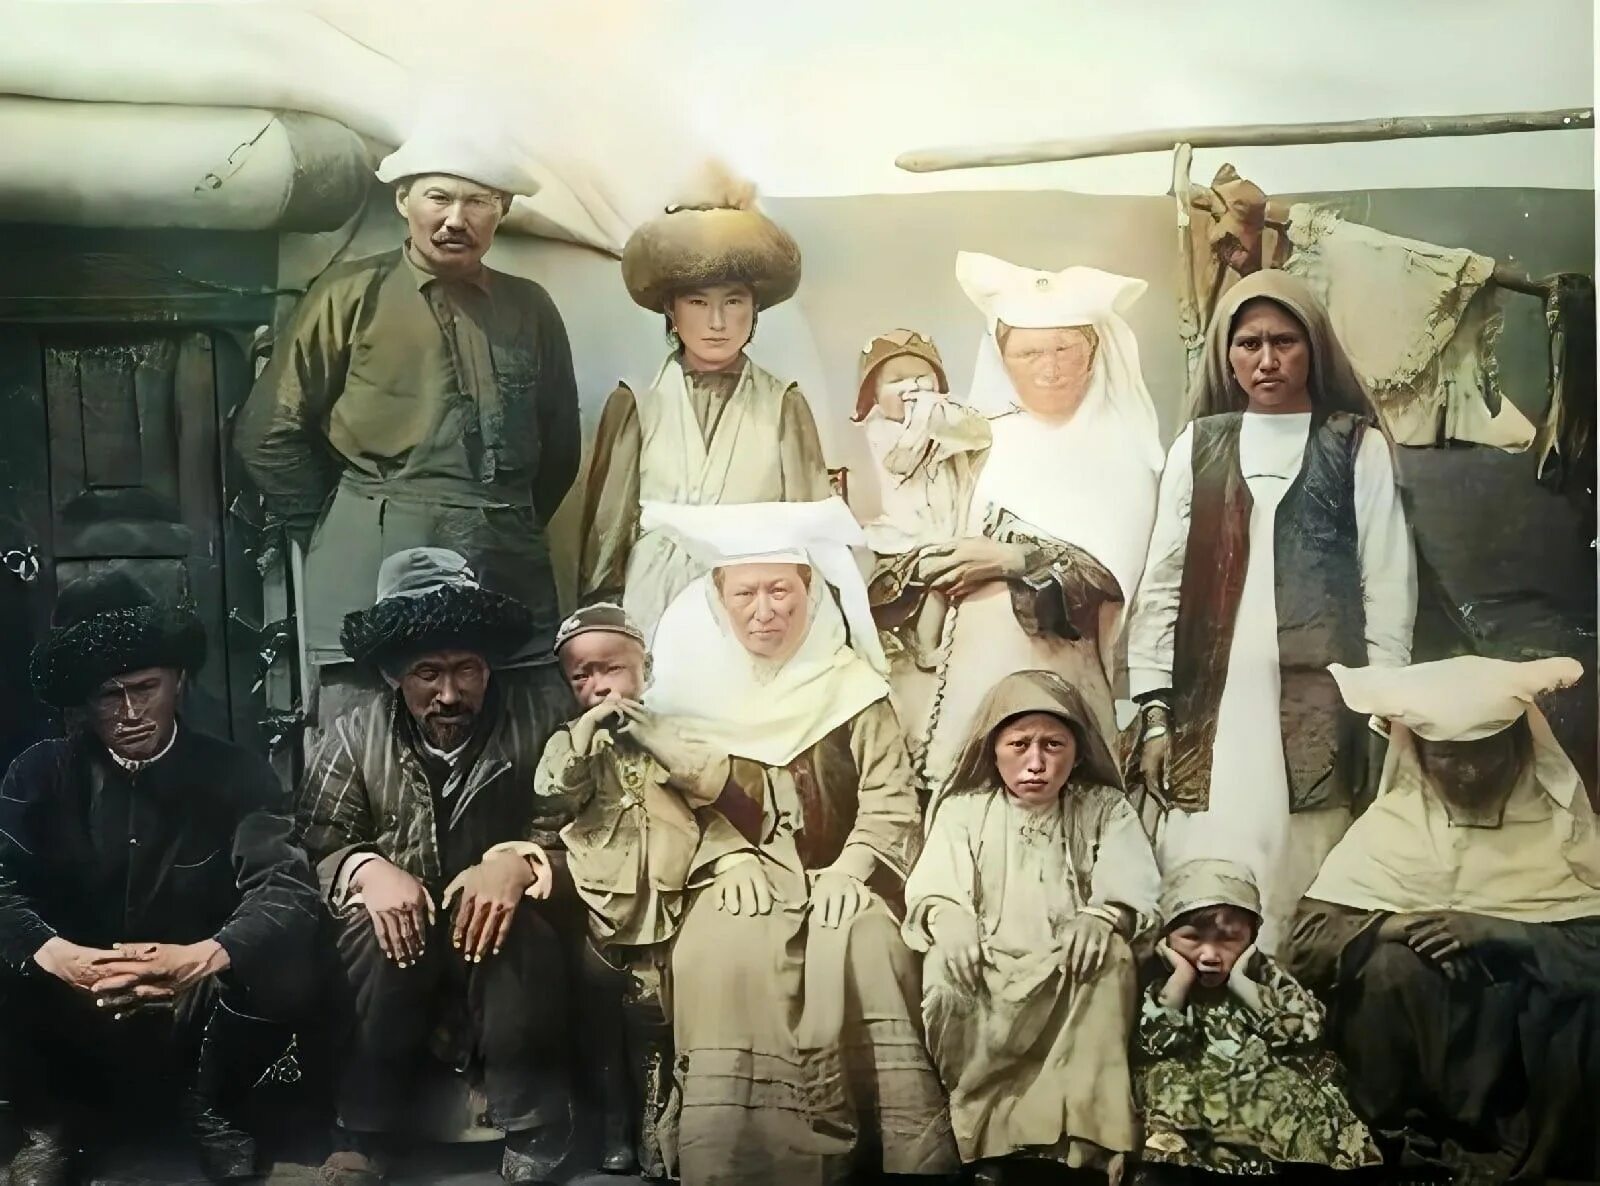 Казахи 19 век. Казахи 19 века. Киргизский Курултай 19 век. Казахи Тургай XVIII век. Казахи 20 века.